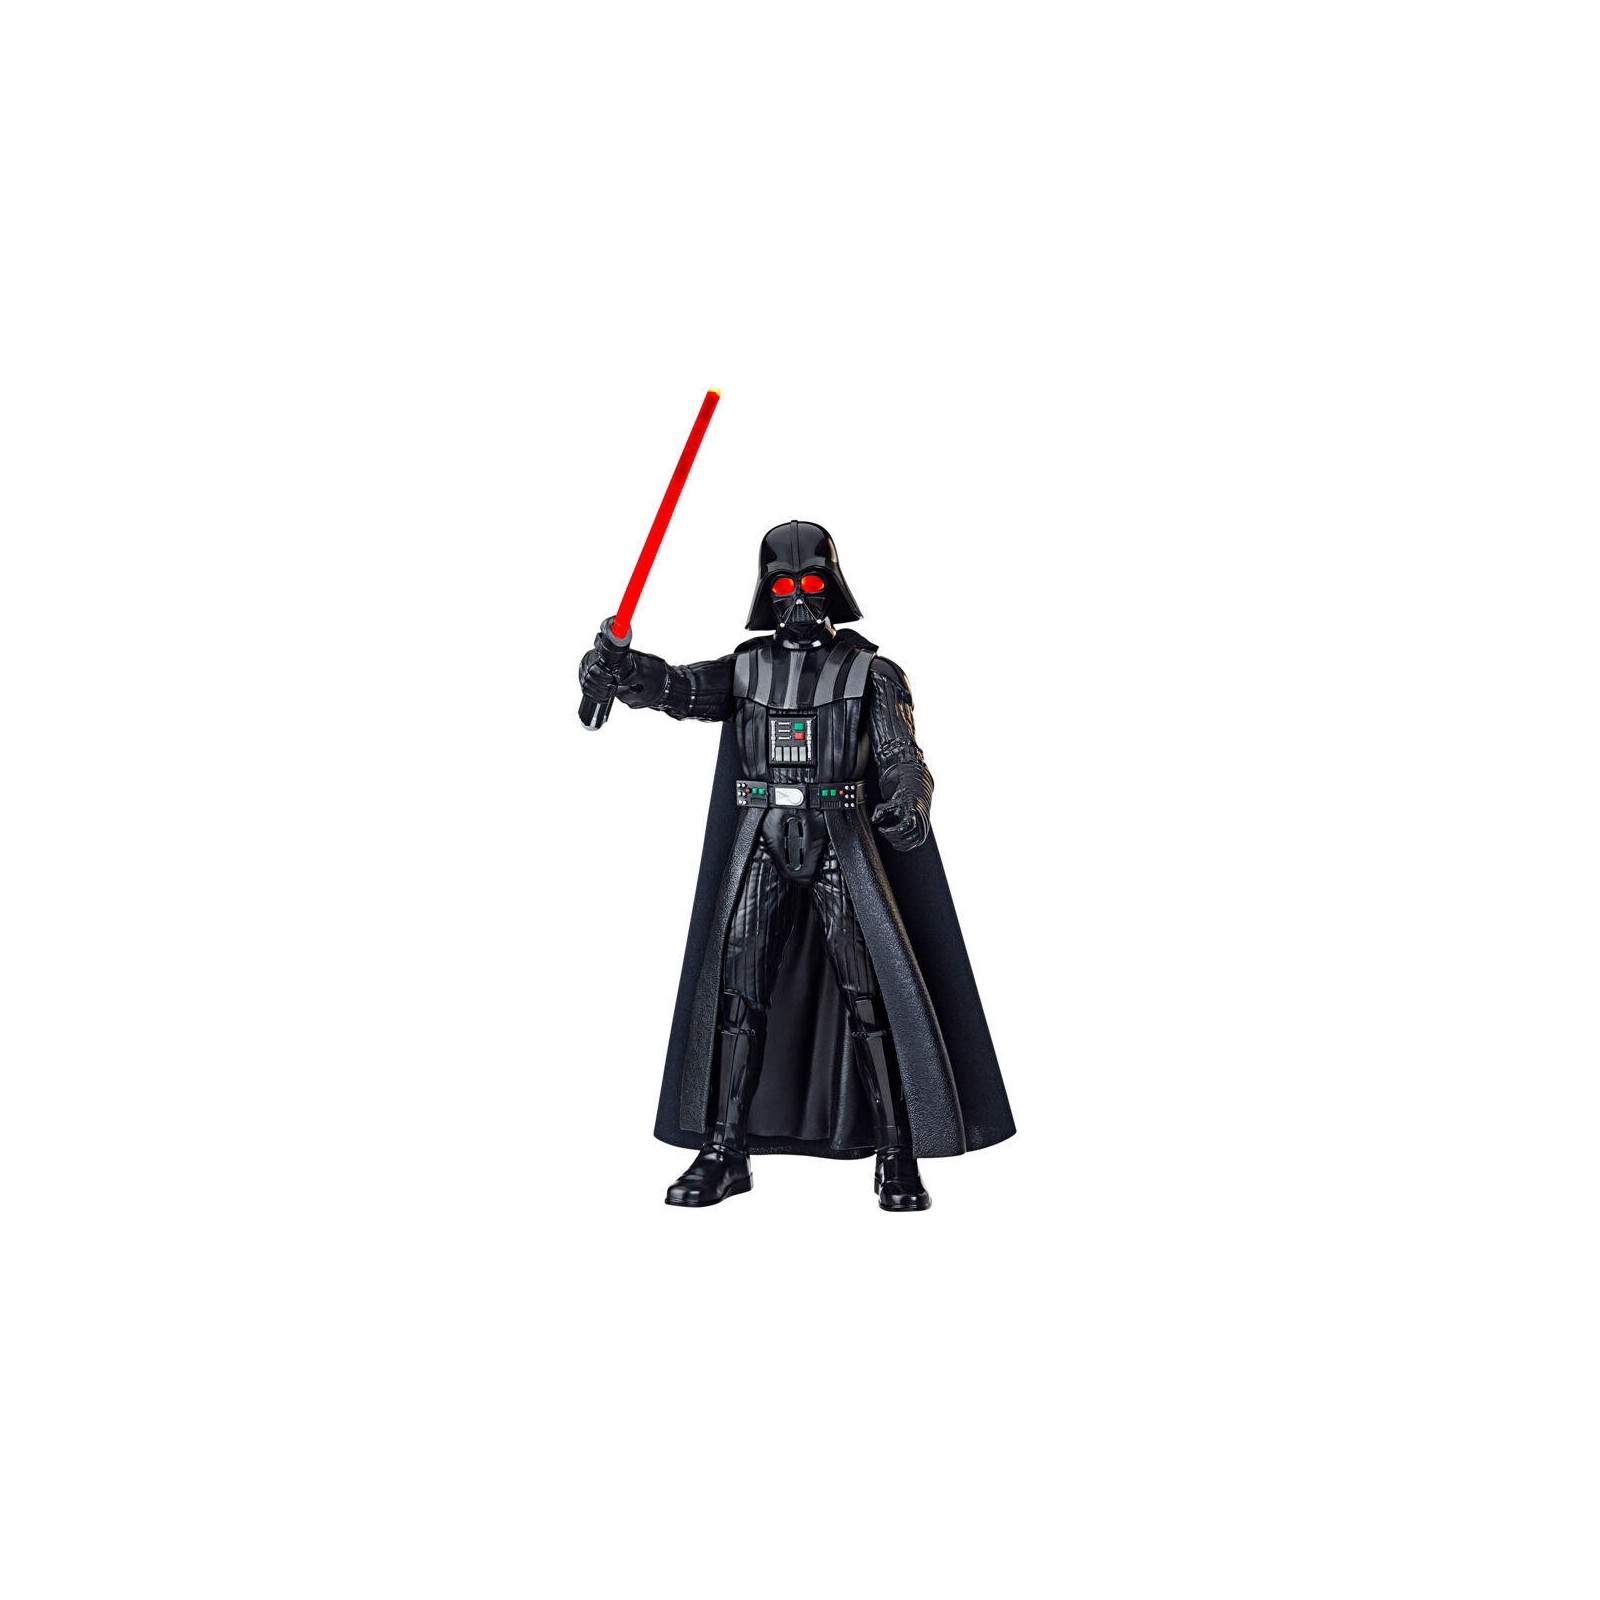 Figura Darth Vader Obi-Wan Kenobi Star Wars 30Cm